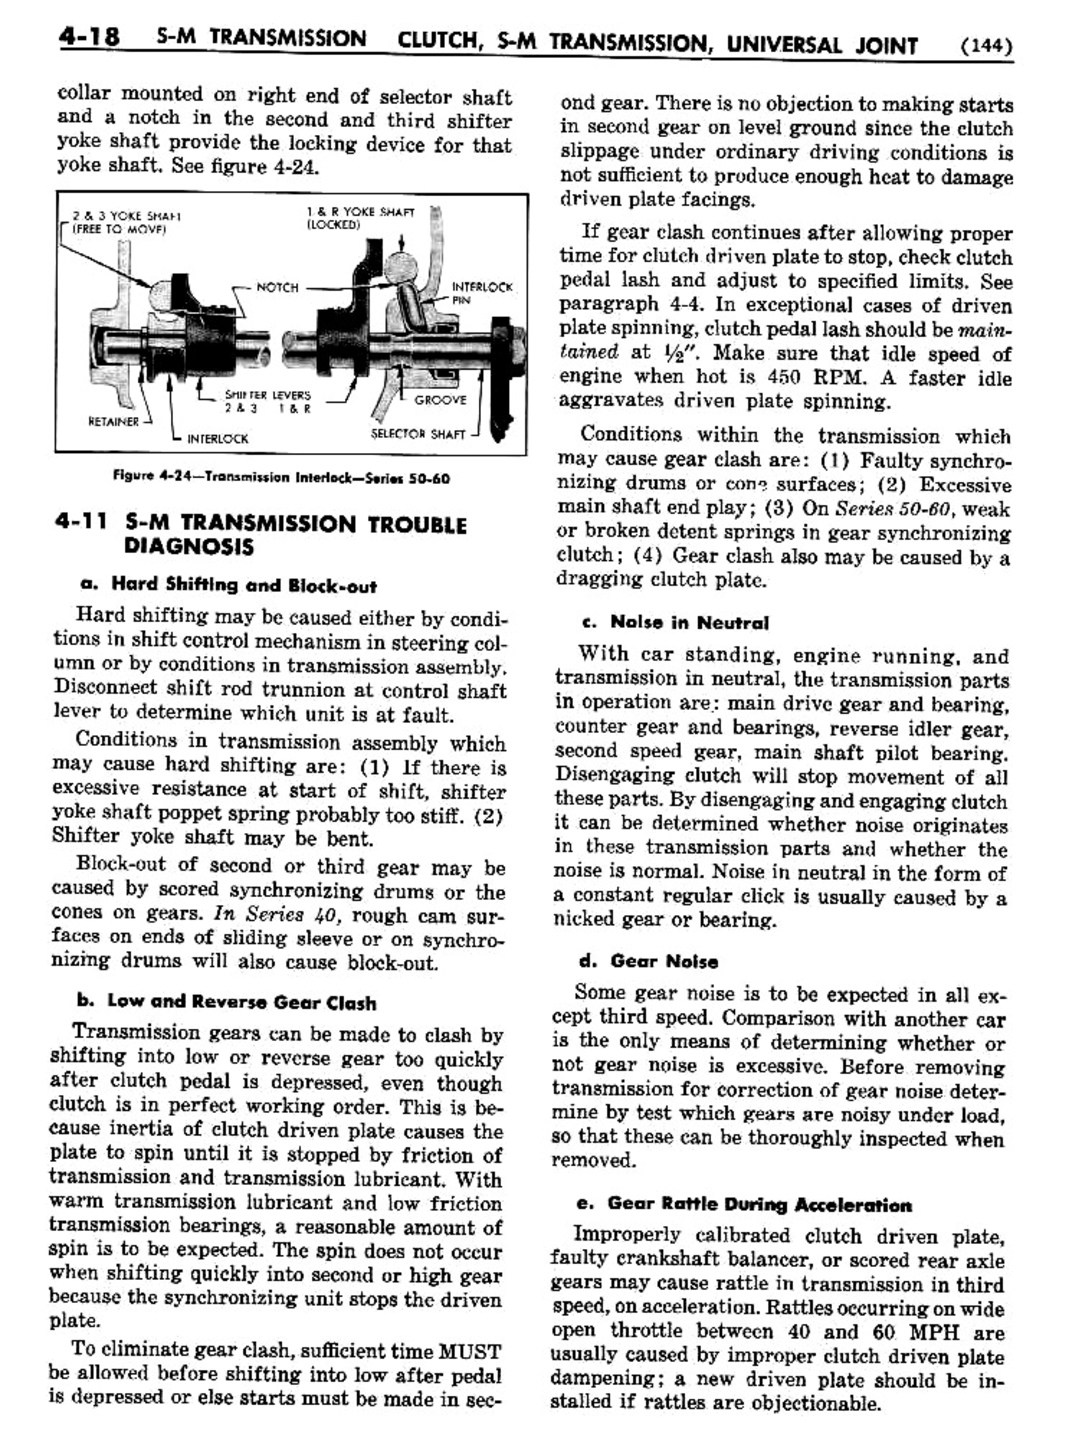 n_05 1954 Buick Shop Manual - Clutch & Trans-018-018.jpg